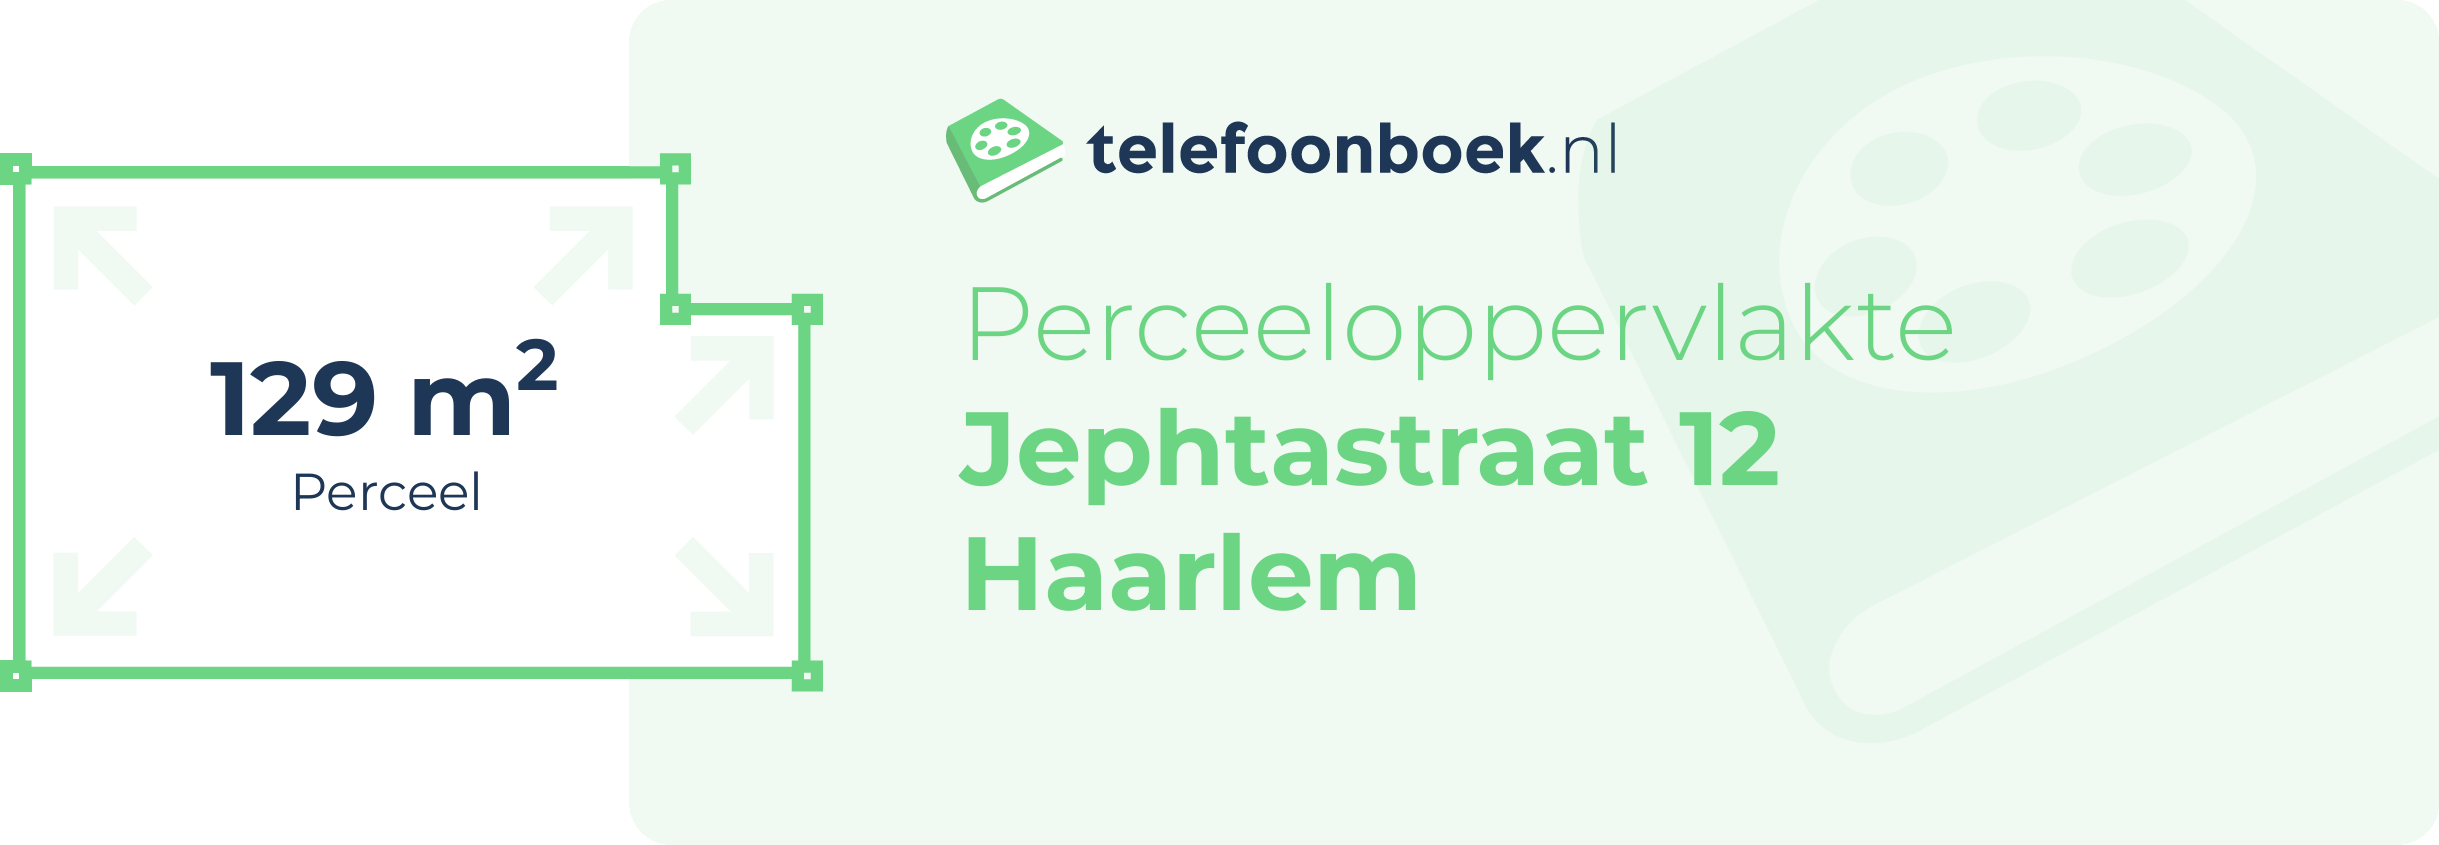 Perceeloppervlakte Jephtastraat 12 Haarlem